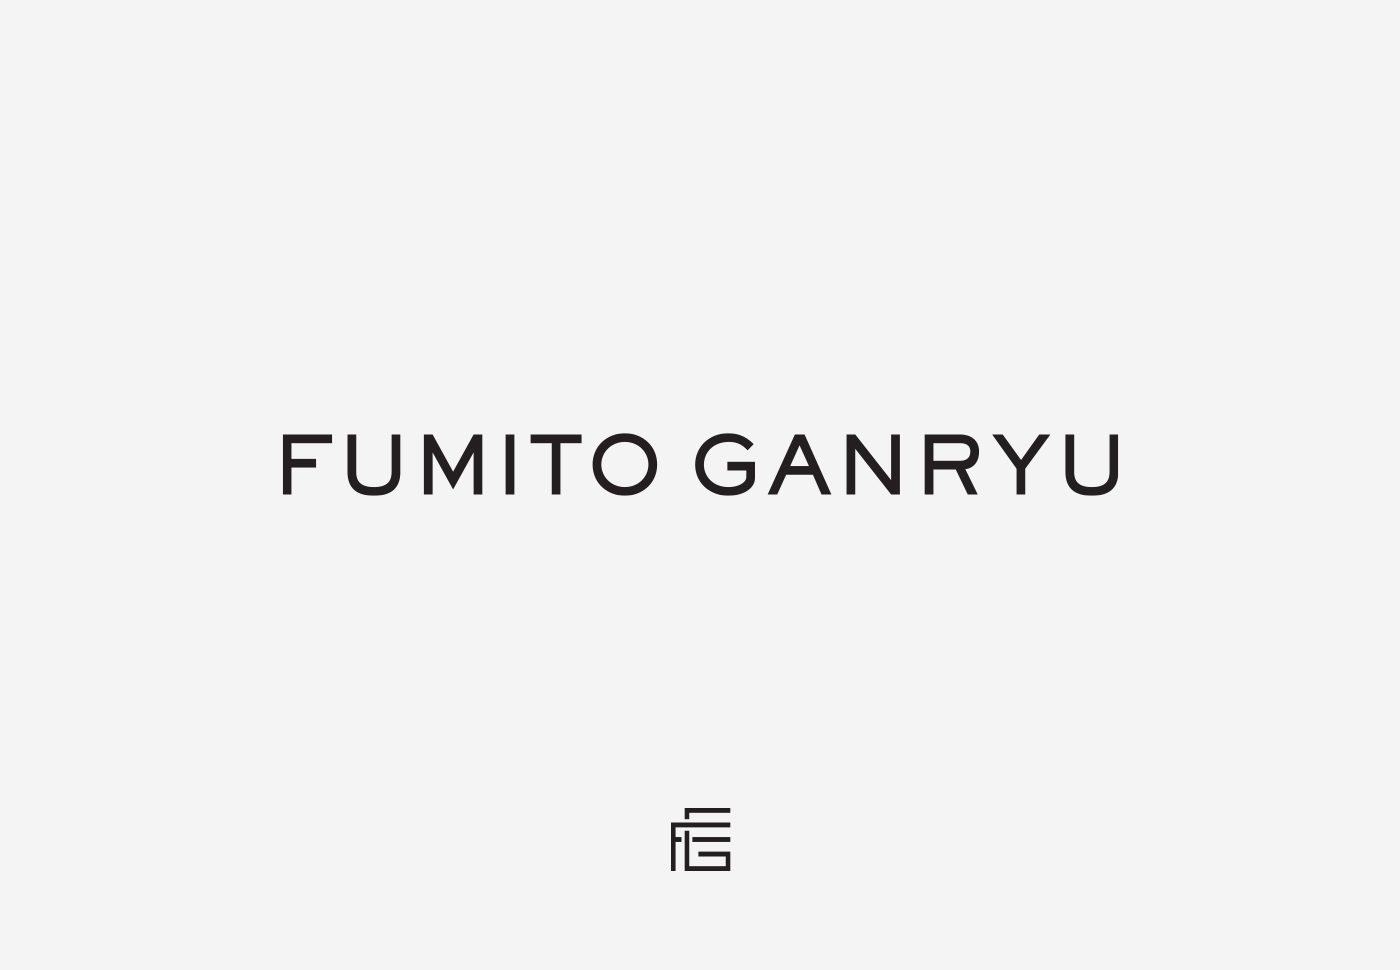 Fumito Ganryu – Visual identity